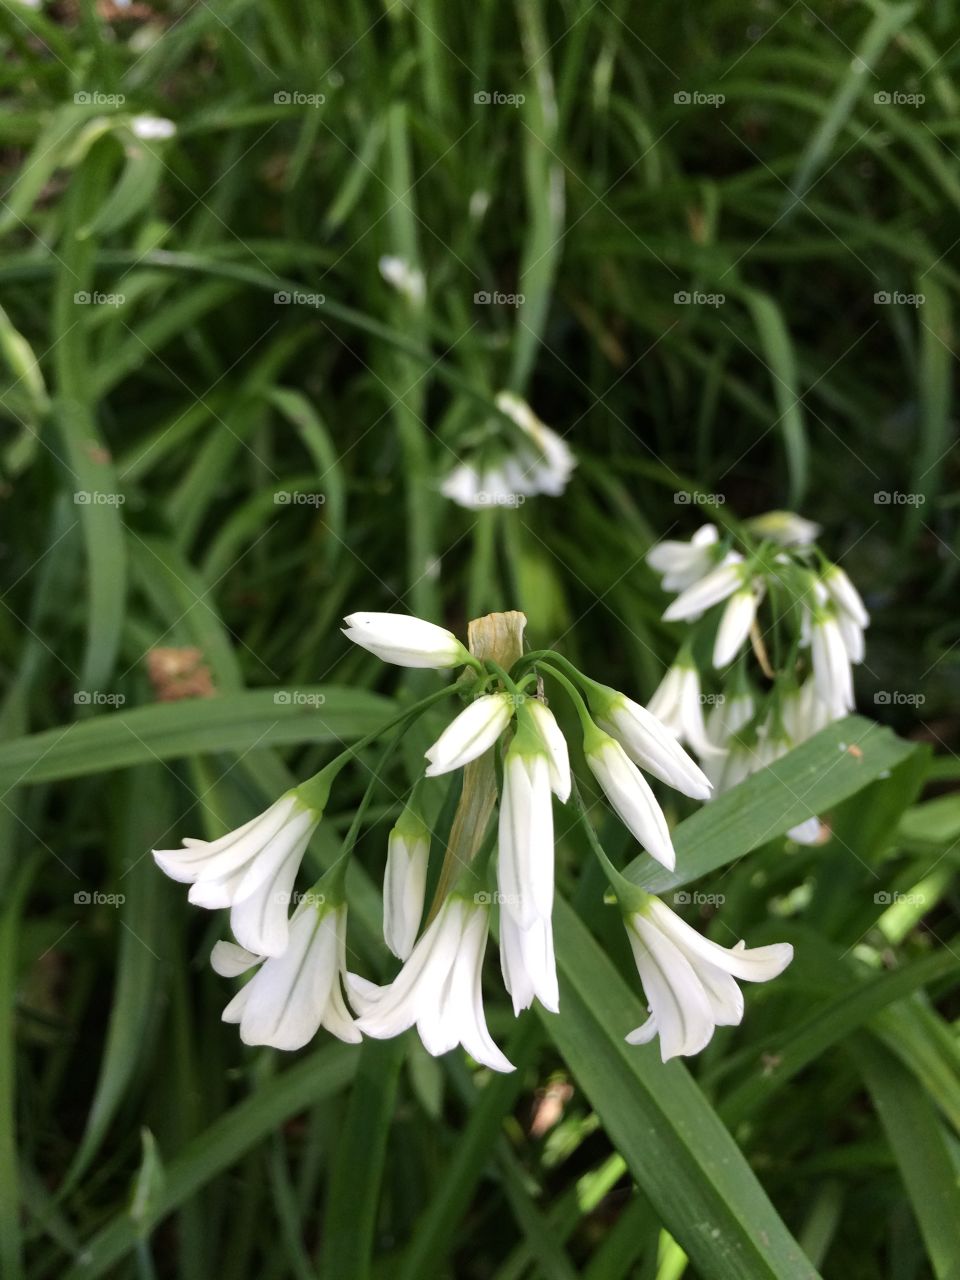 Dainty white flowers